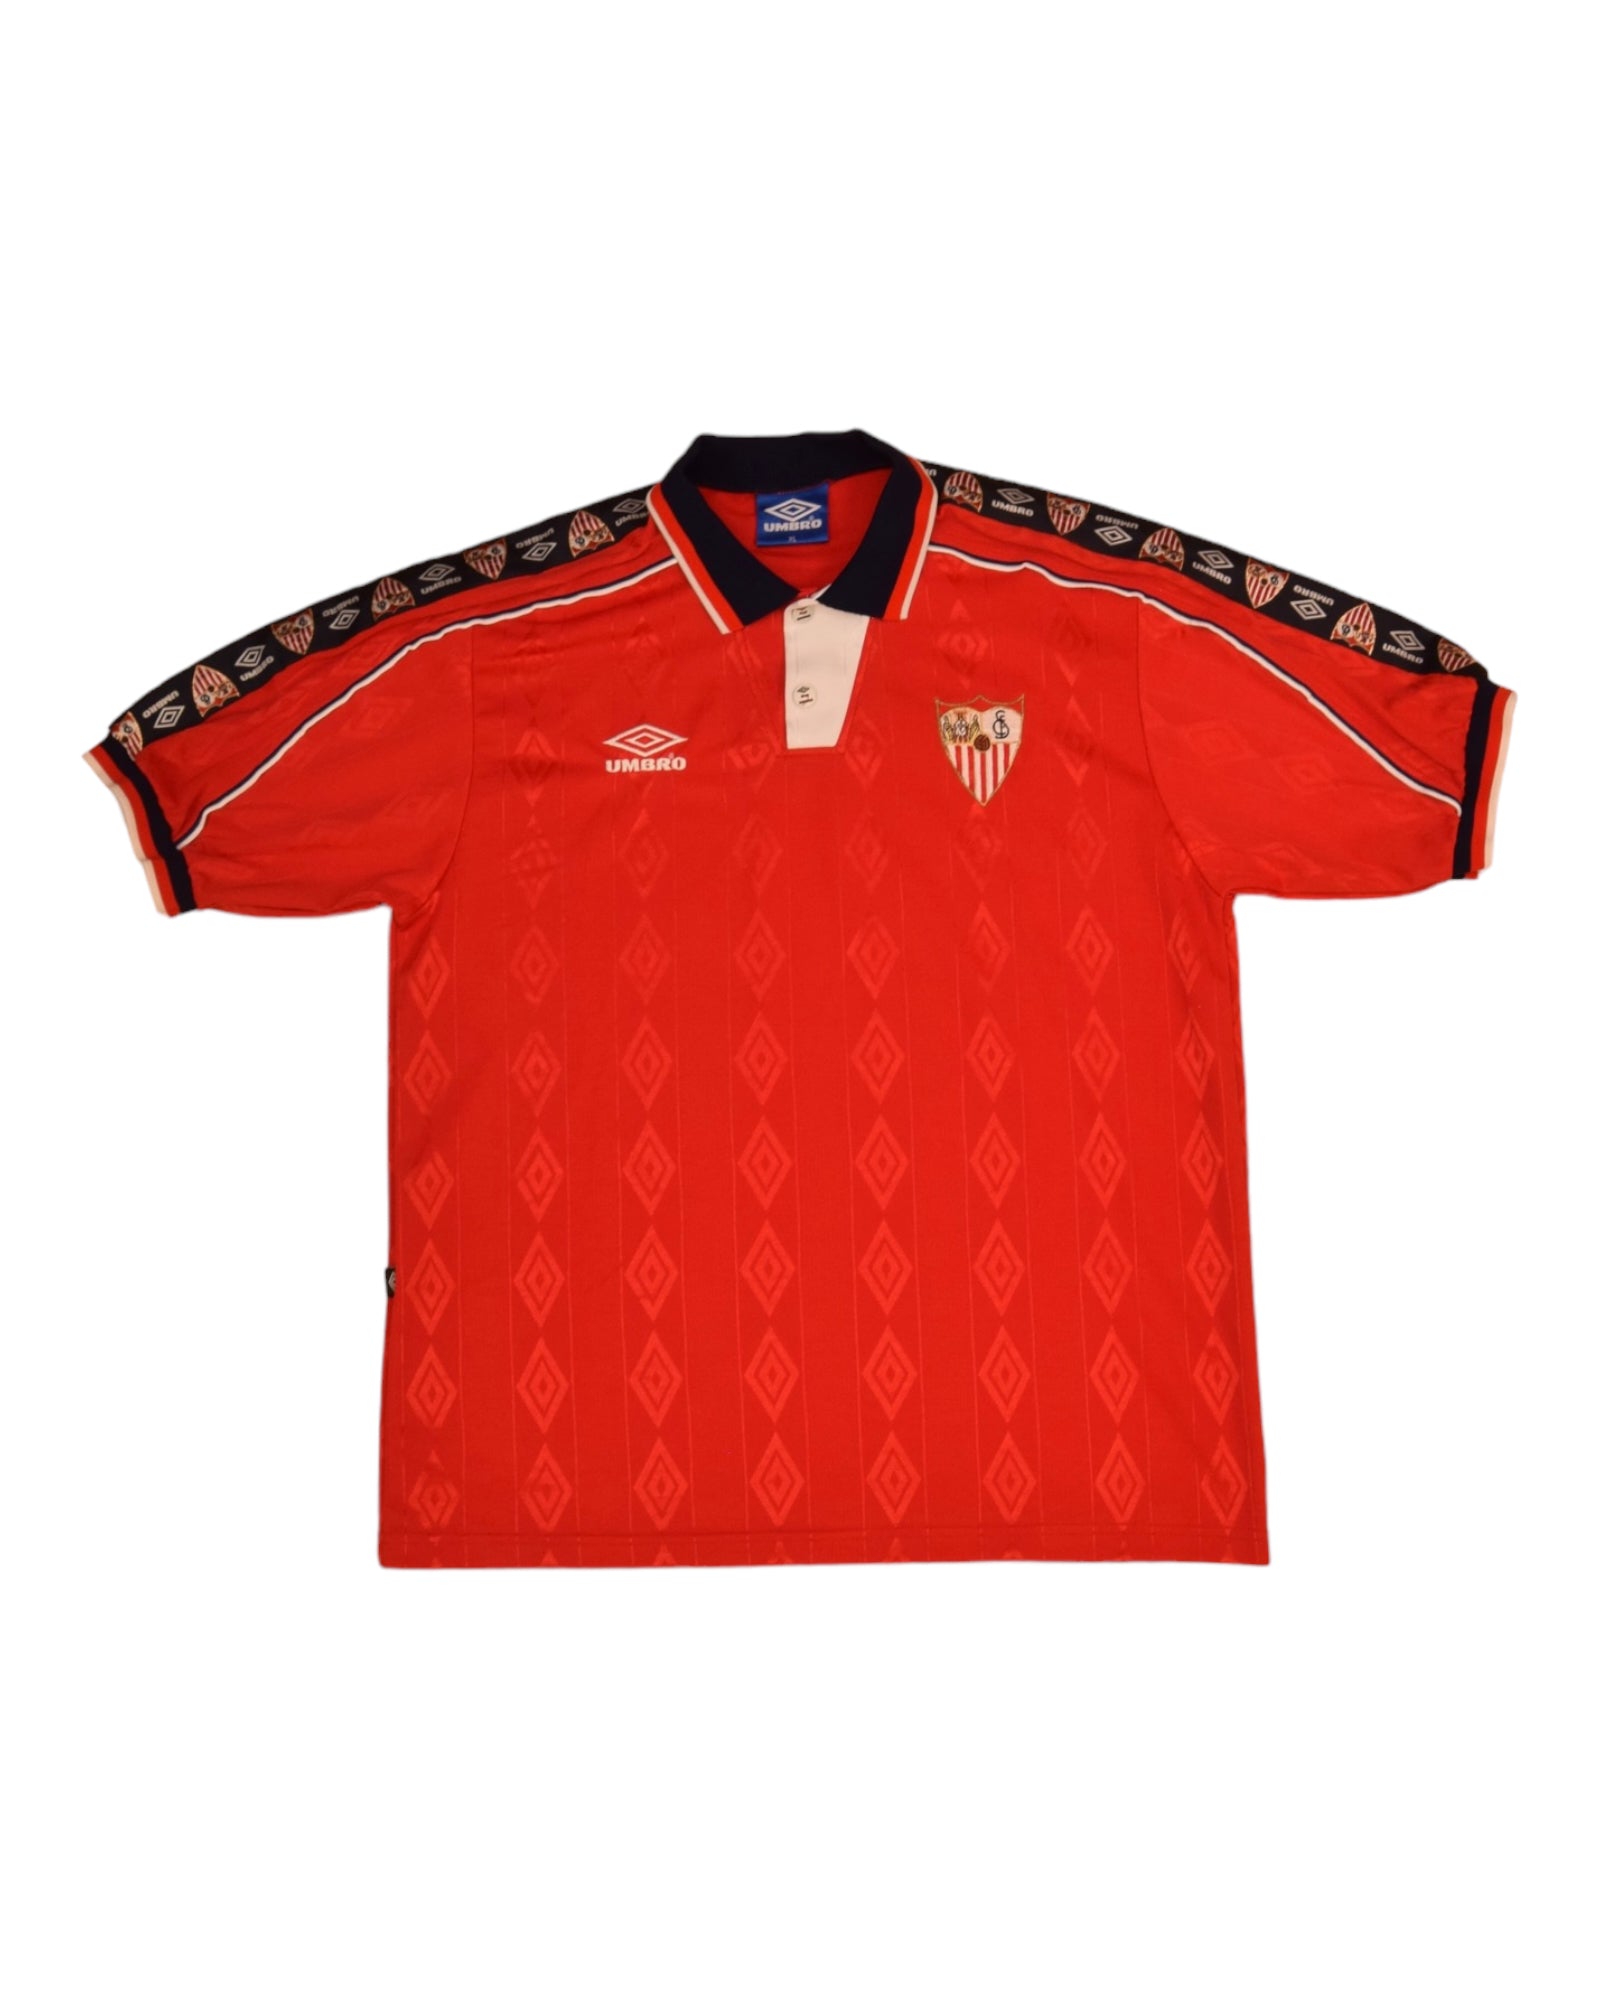 Sevilla FC 1998 1999 Umbro Away Football Shirt Made in EEC Size XL